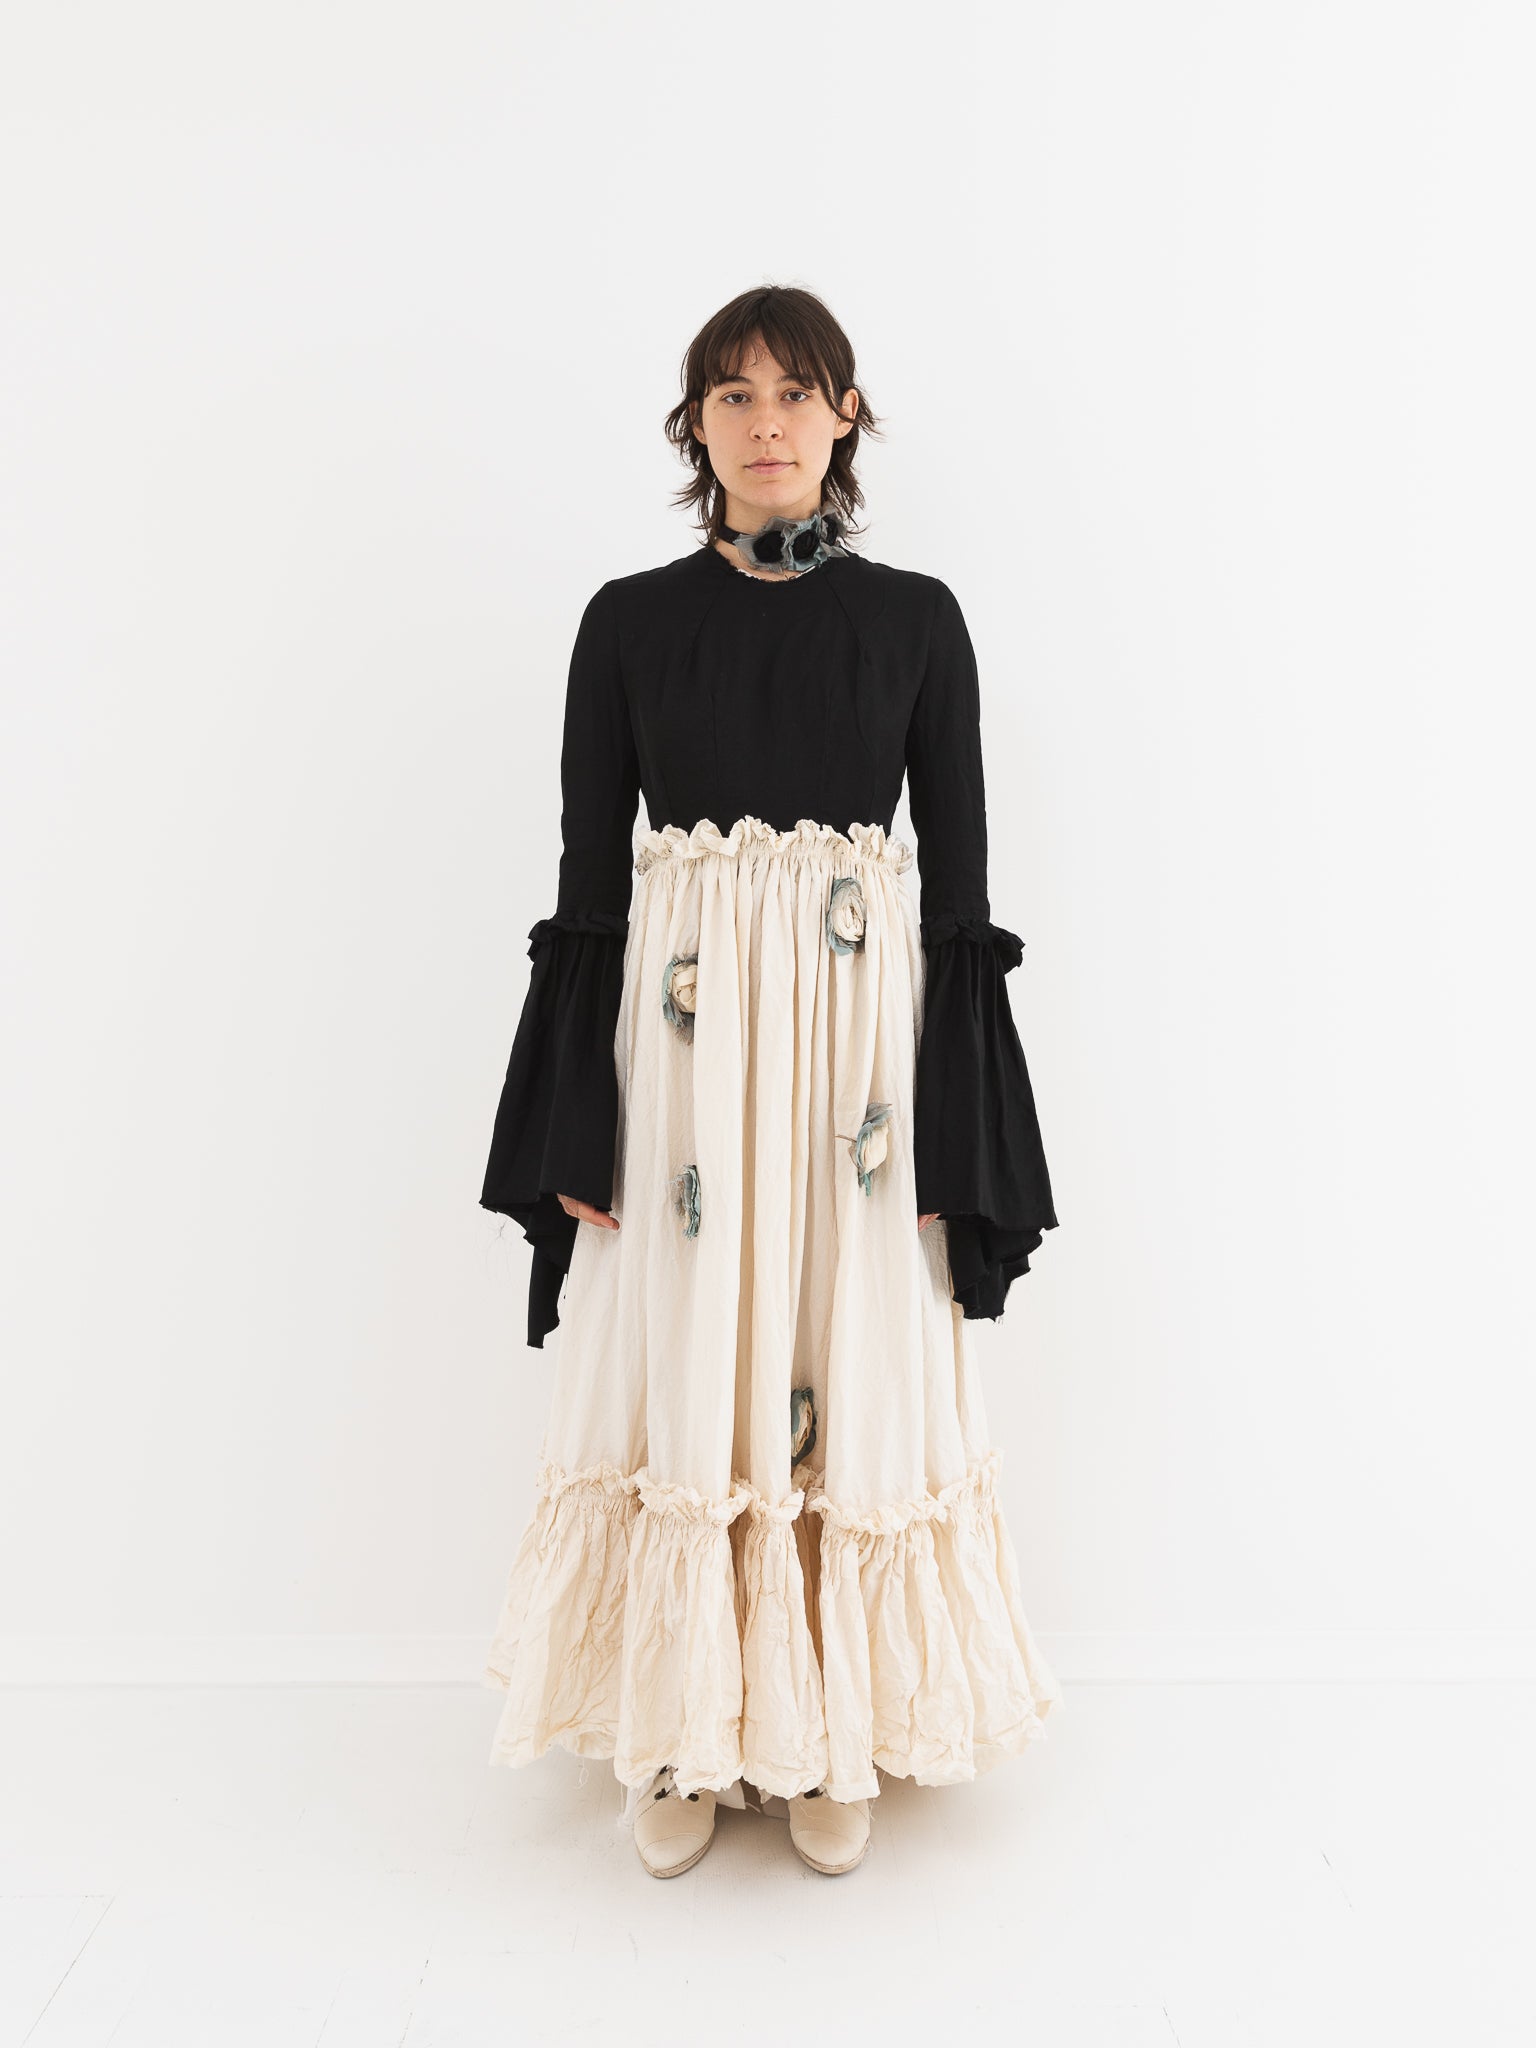 Elena Dawson Chateau Dress - Worthwhile, Inc.